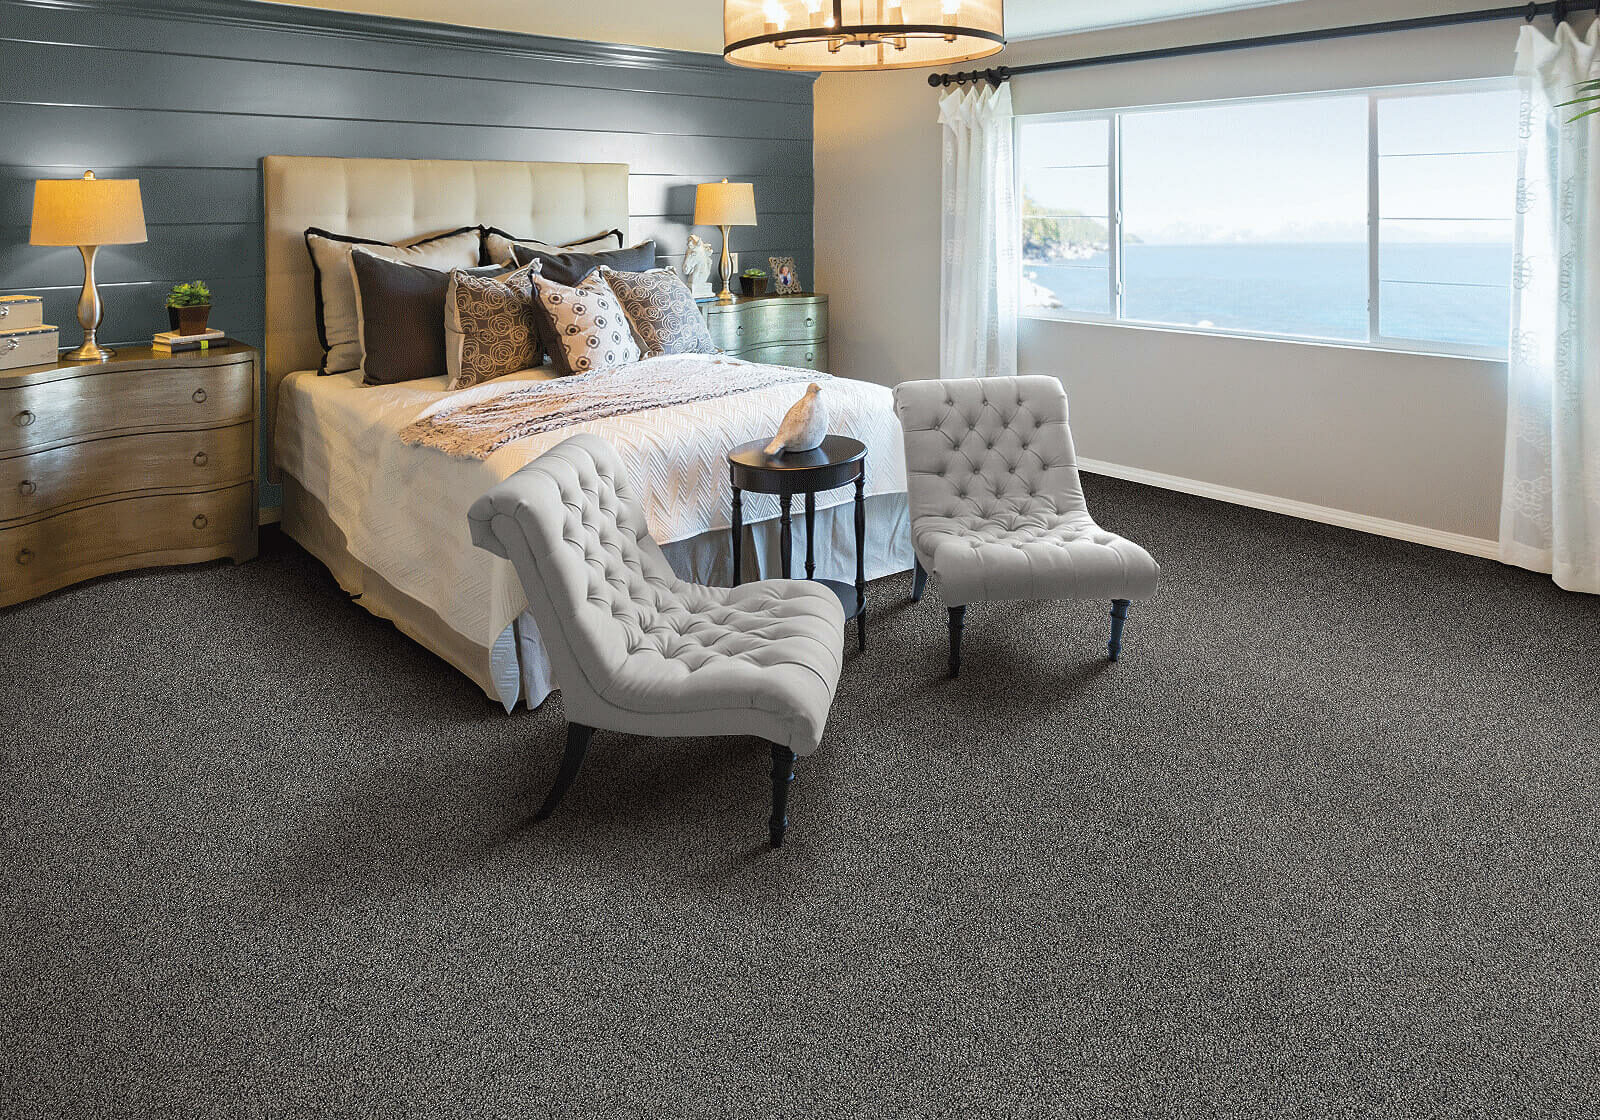 Lavish bedroom with carpet floor | Gunn Flooring Company